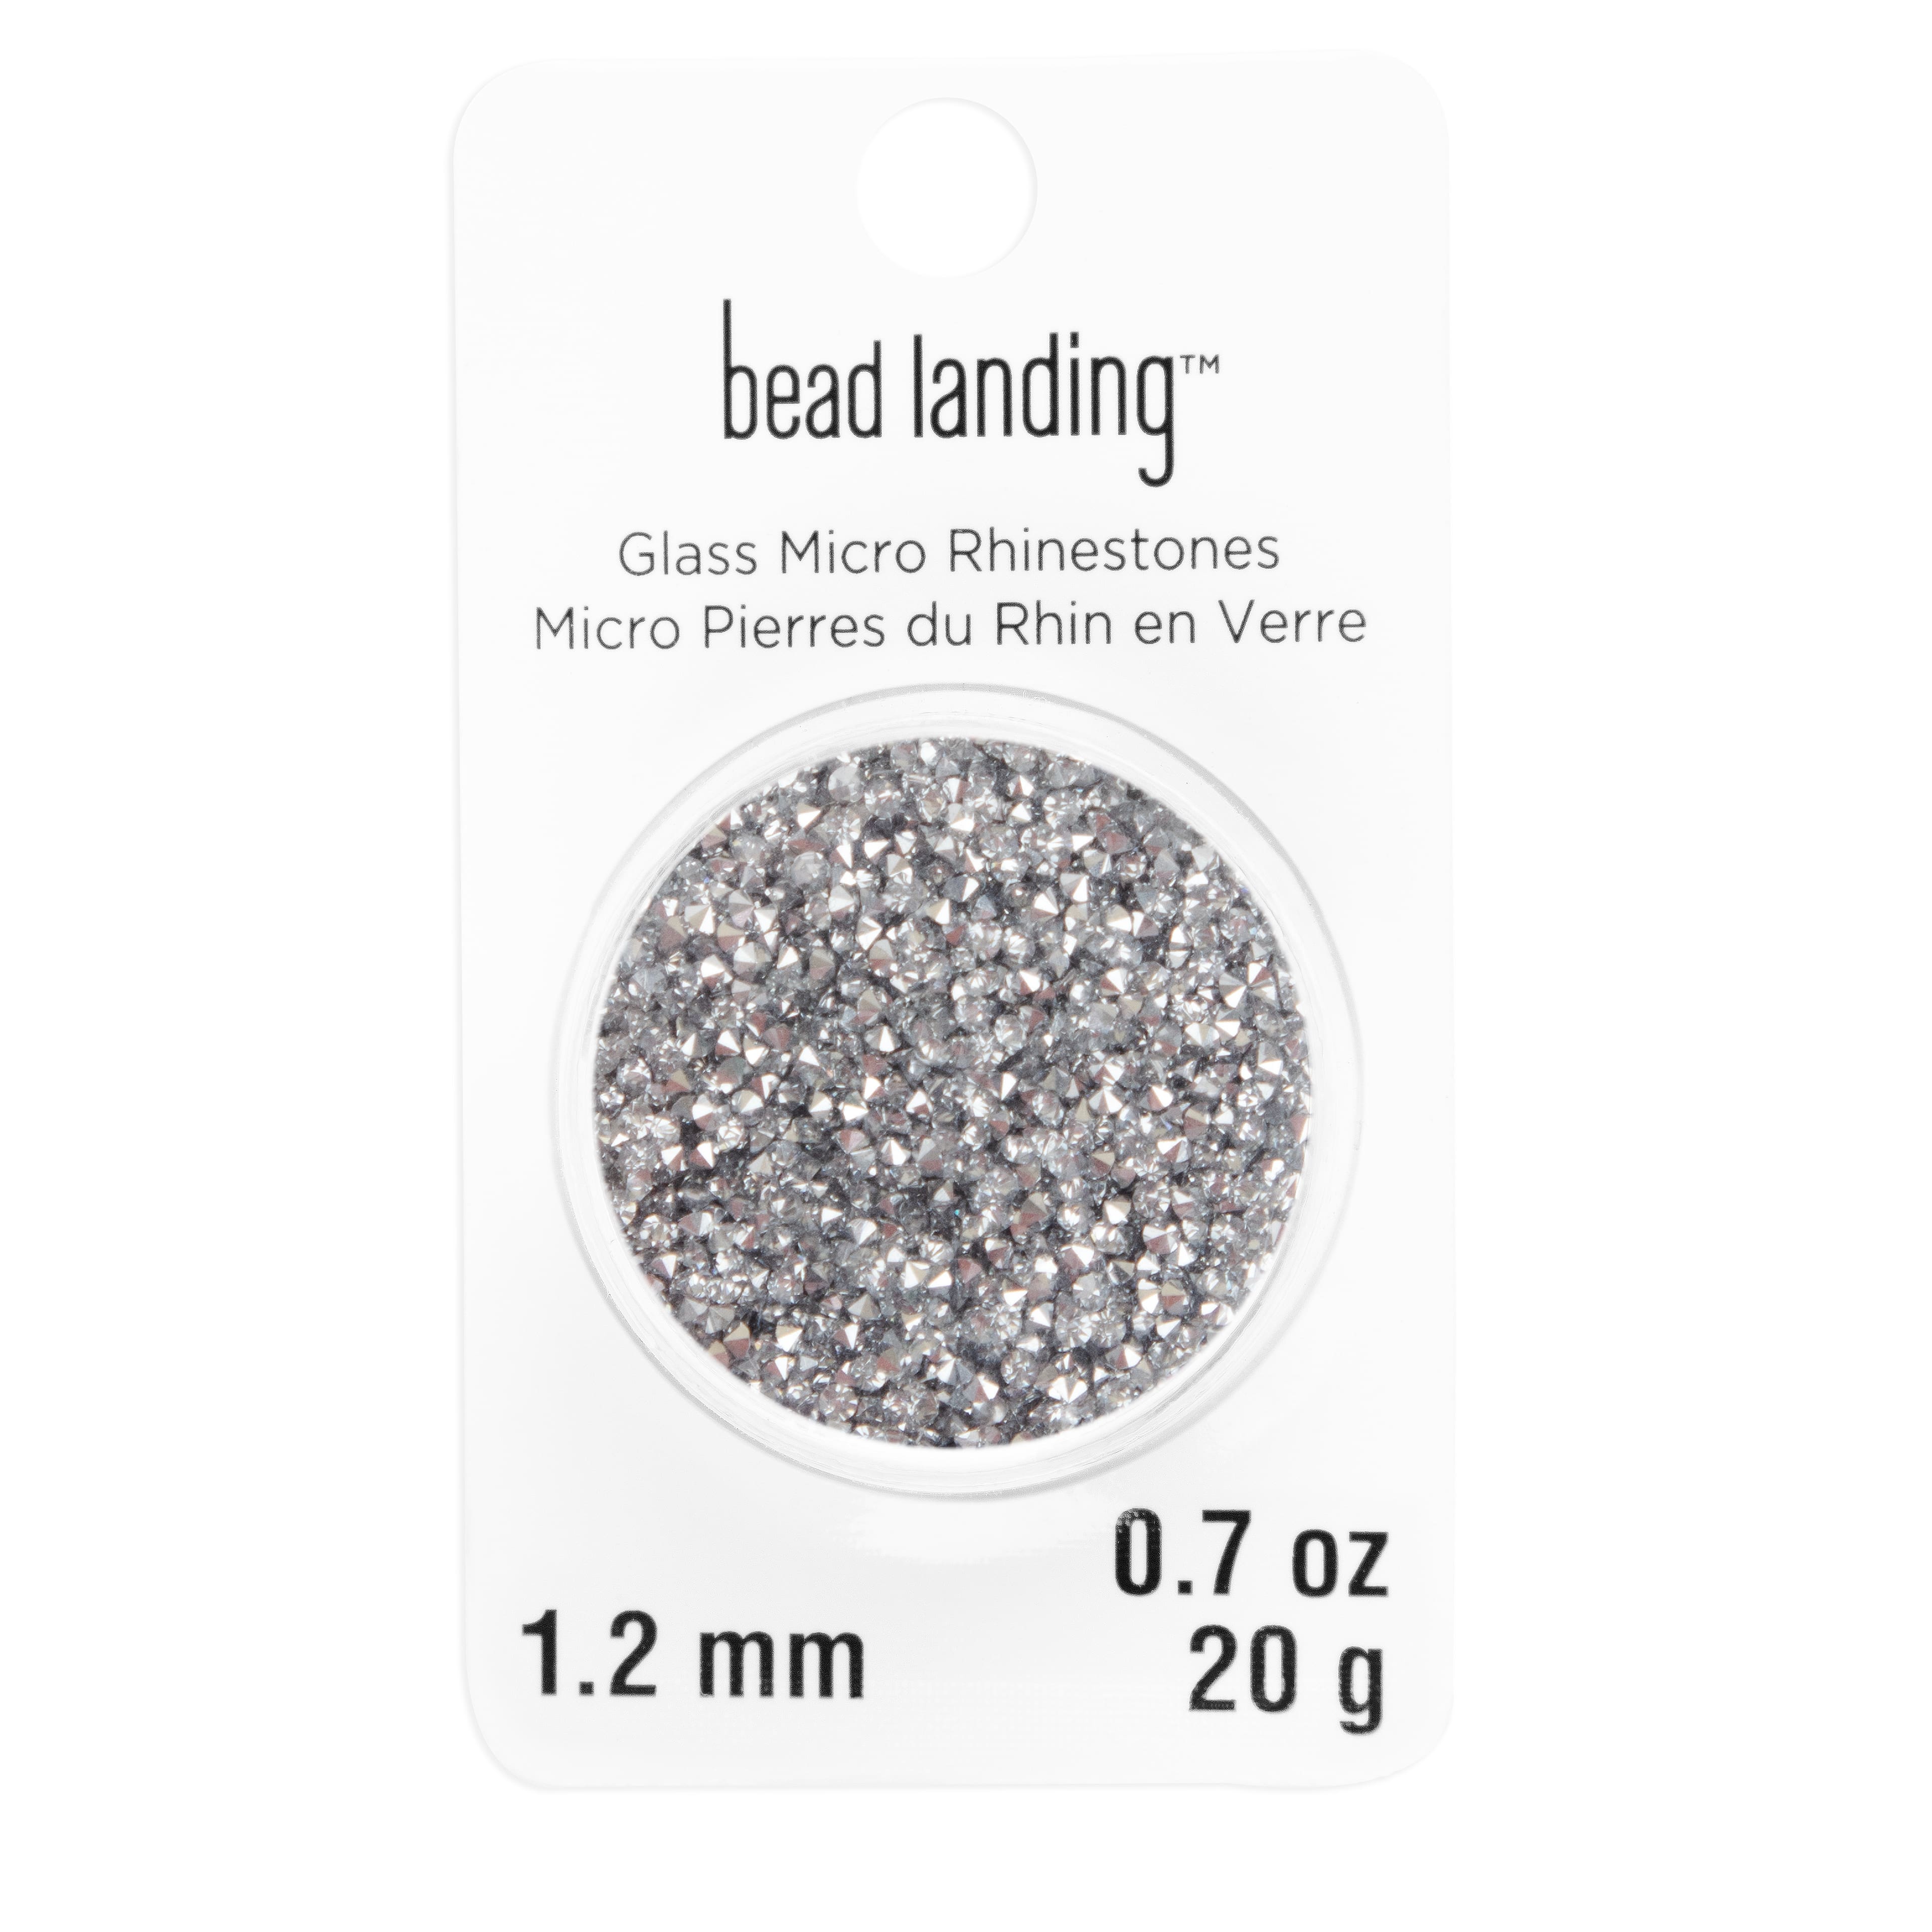 1.2mm Glass Micro Rhinestones by Bead Landing&#x2122;, 0.7oz.